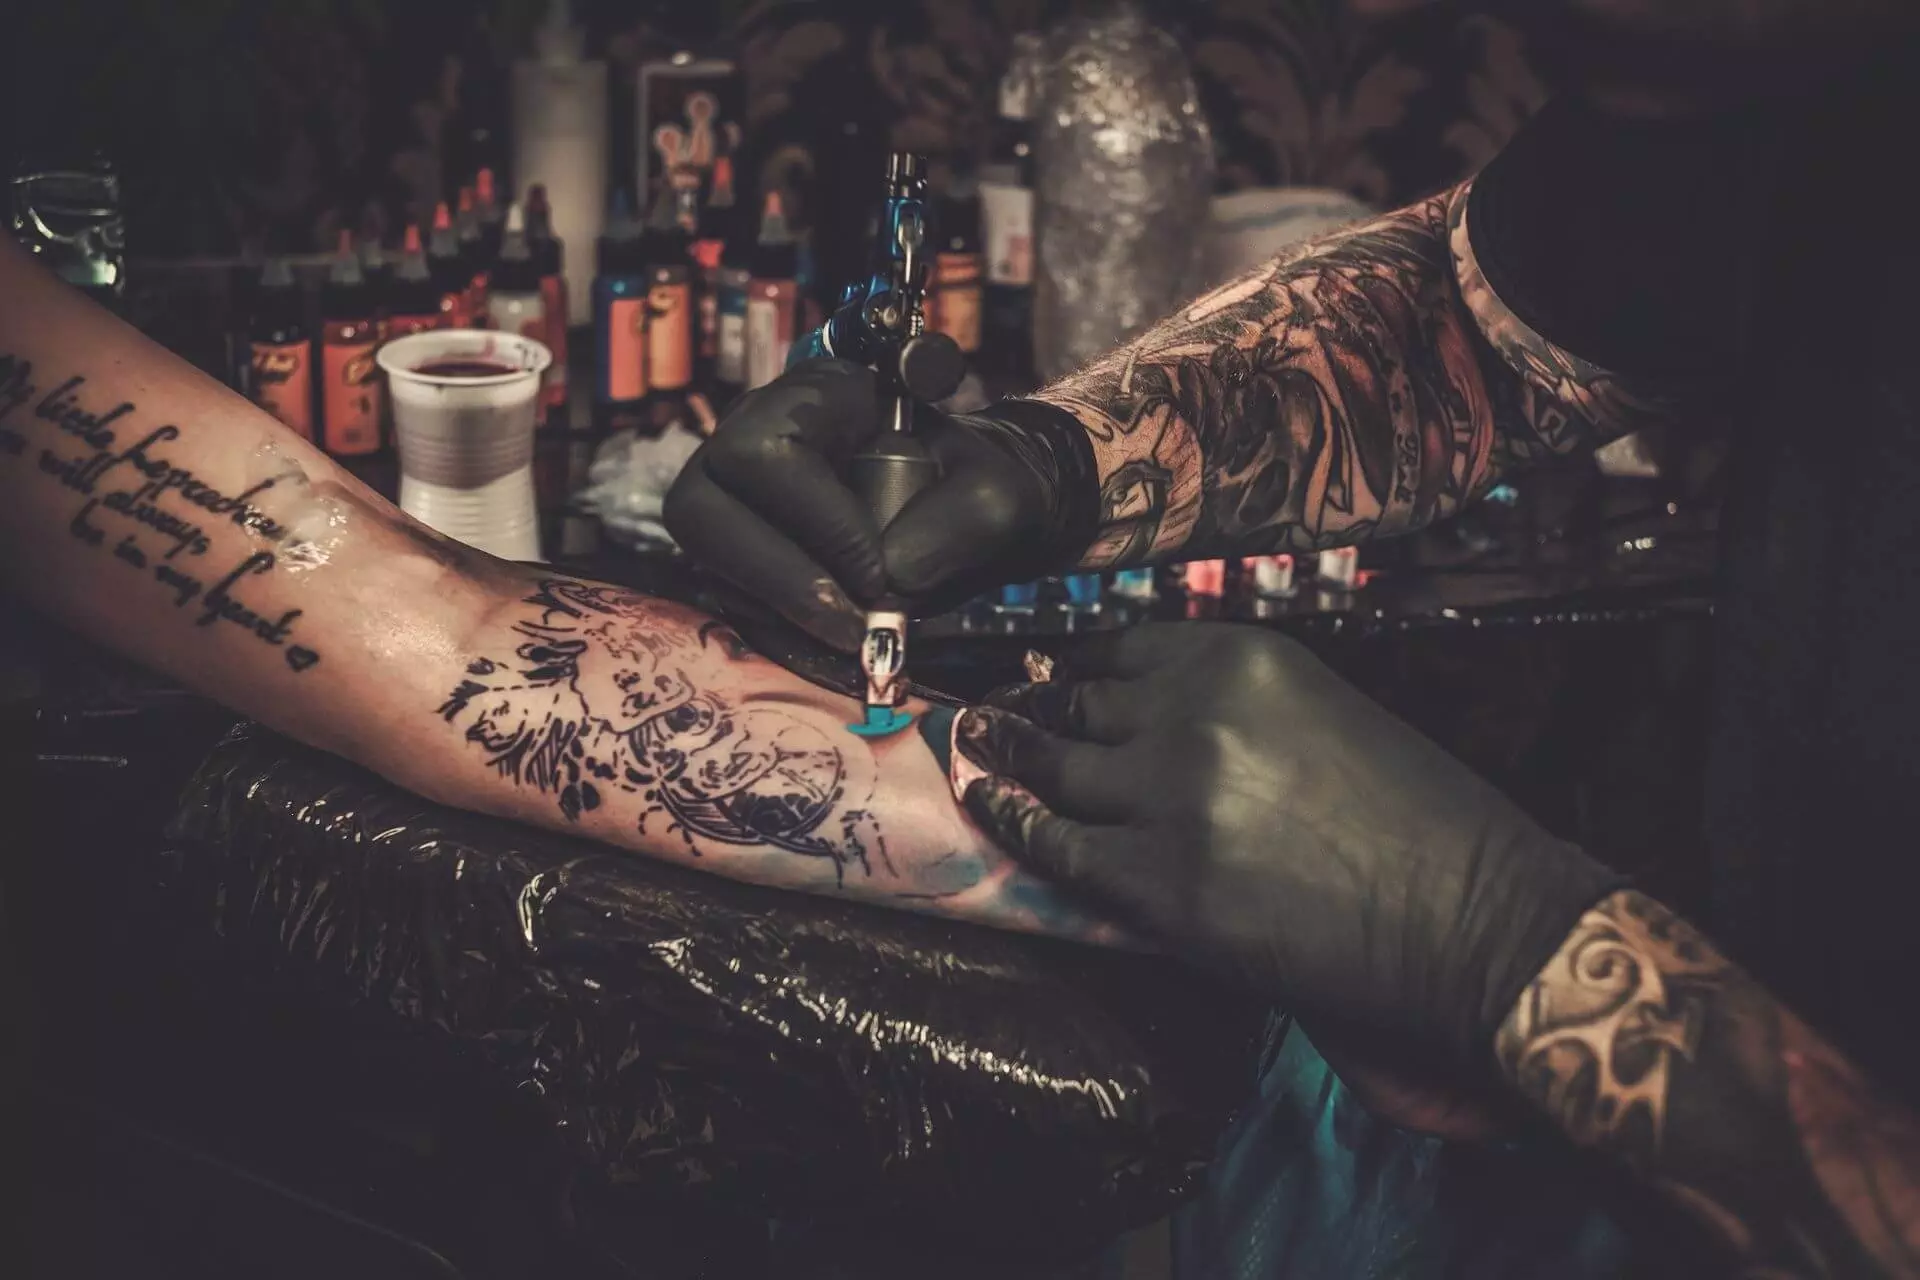 Tattoo and addiction